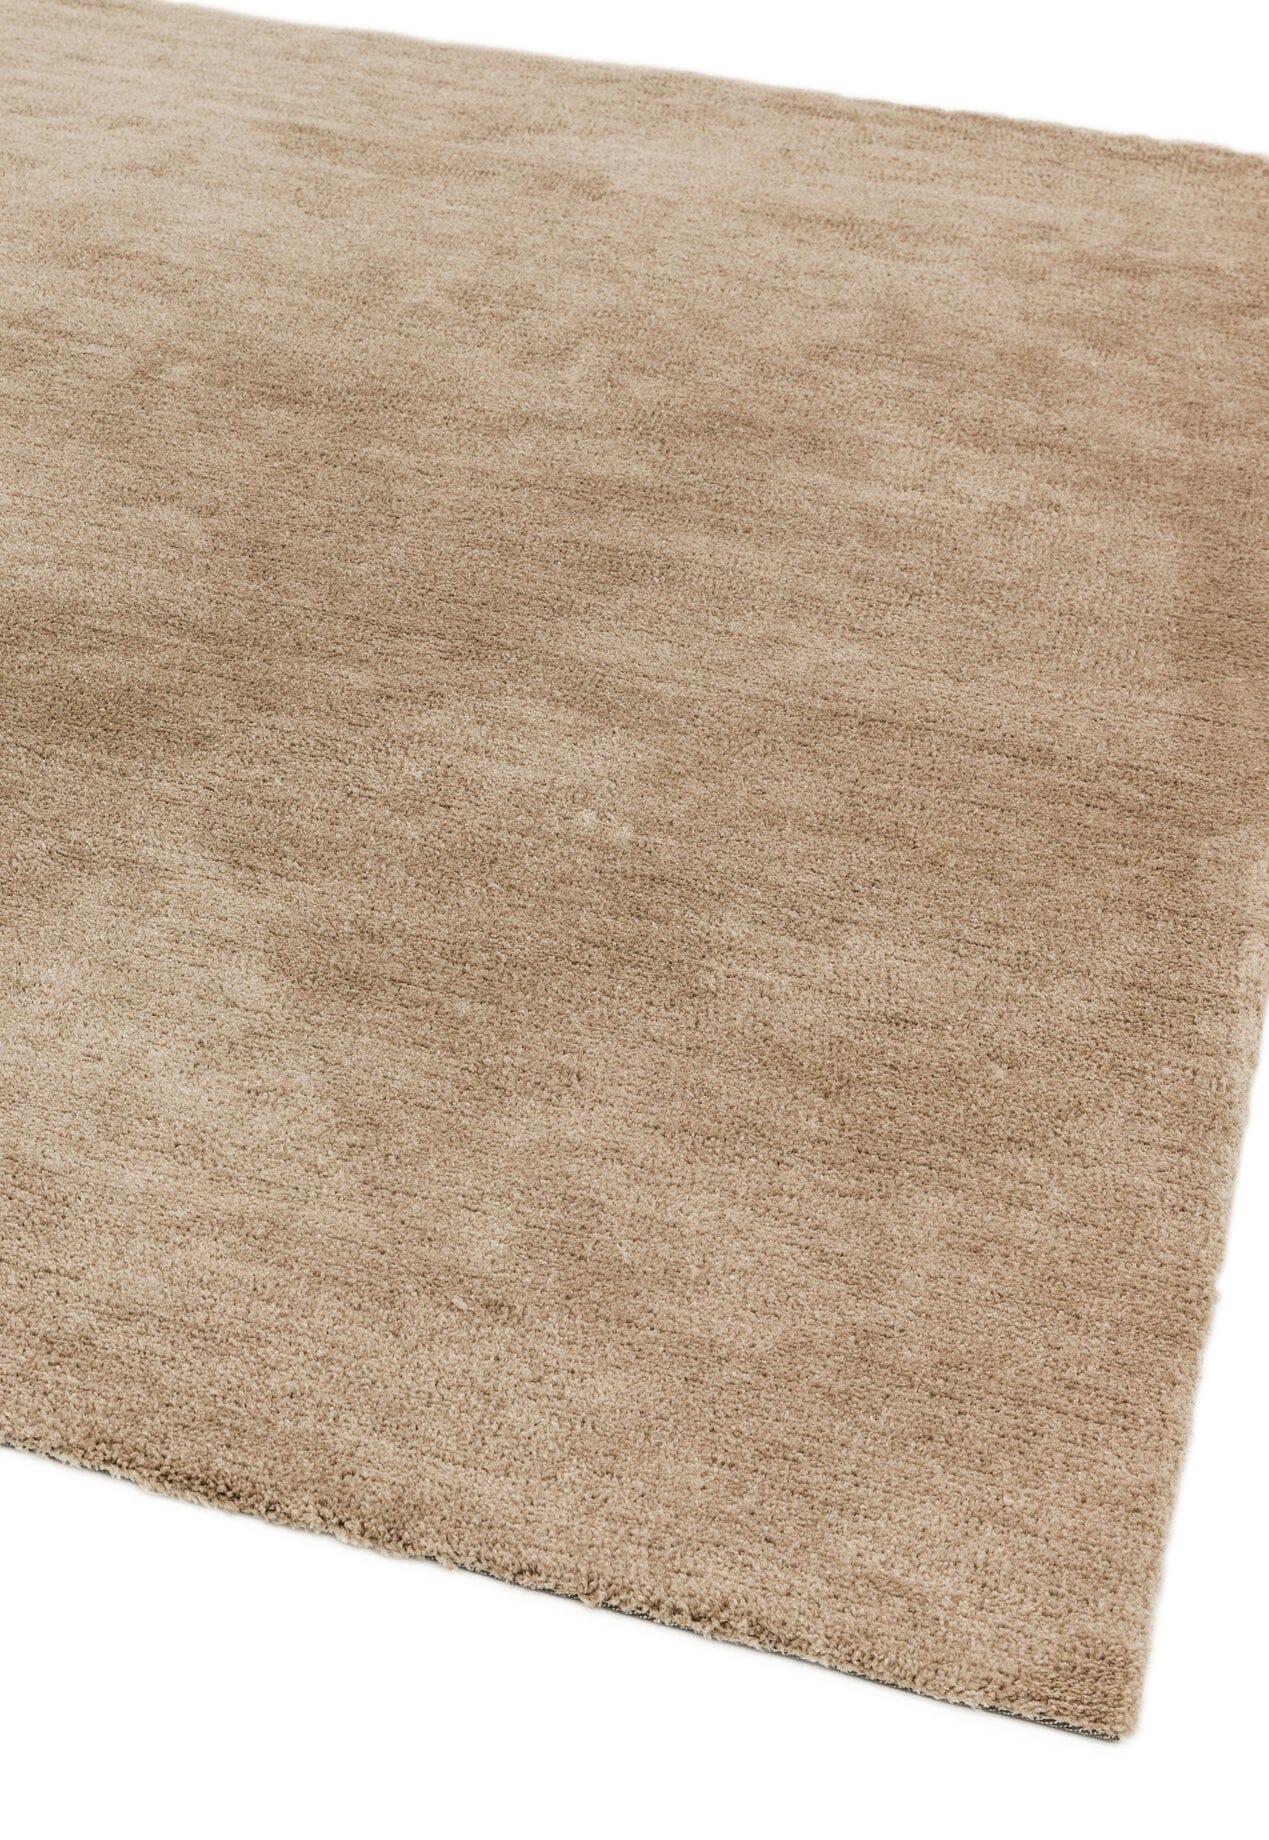 Asiatic Carpets Milo Table Tufted Rug Sand - 200 x 290cm